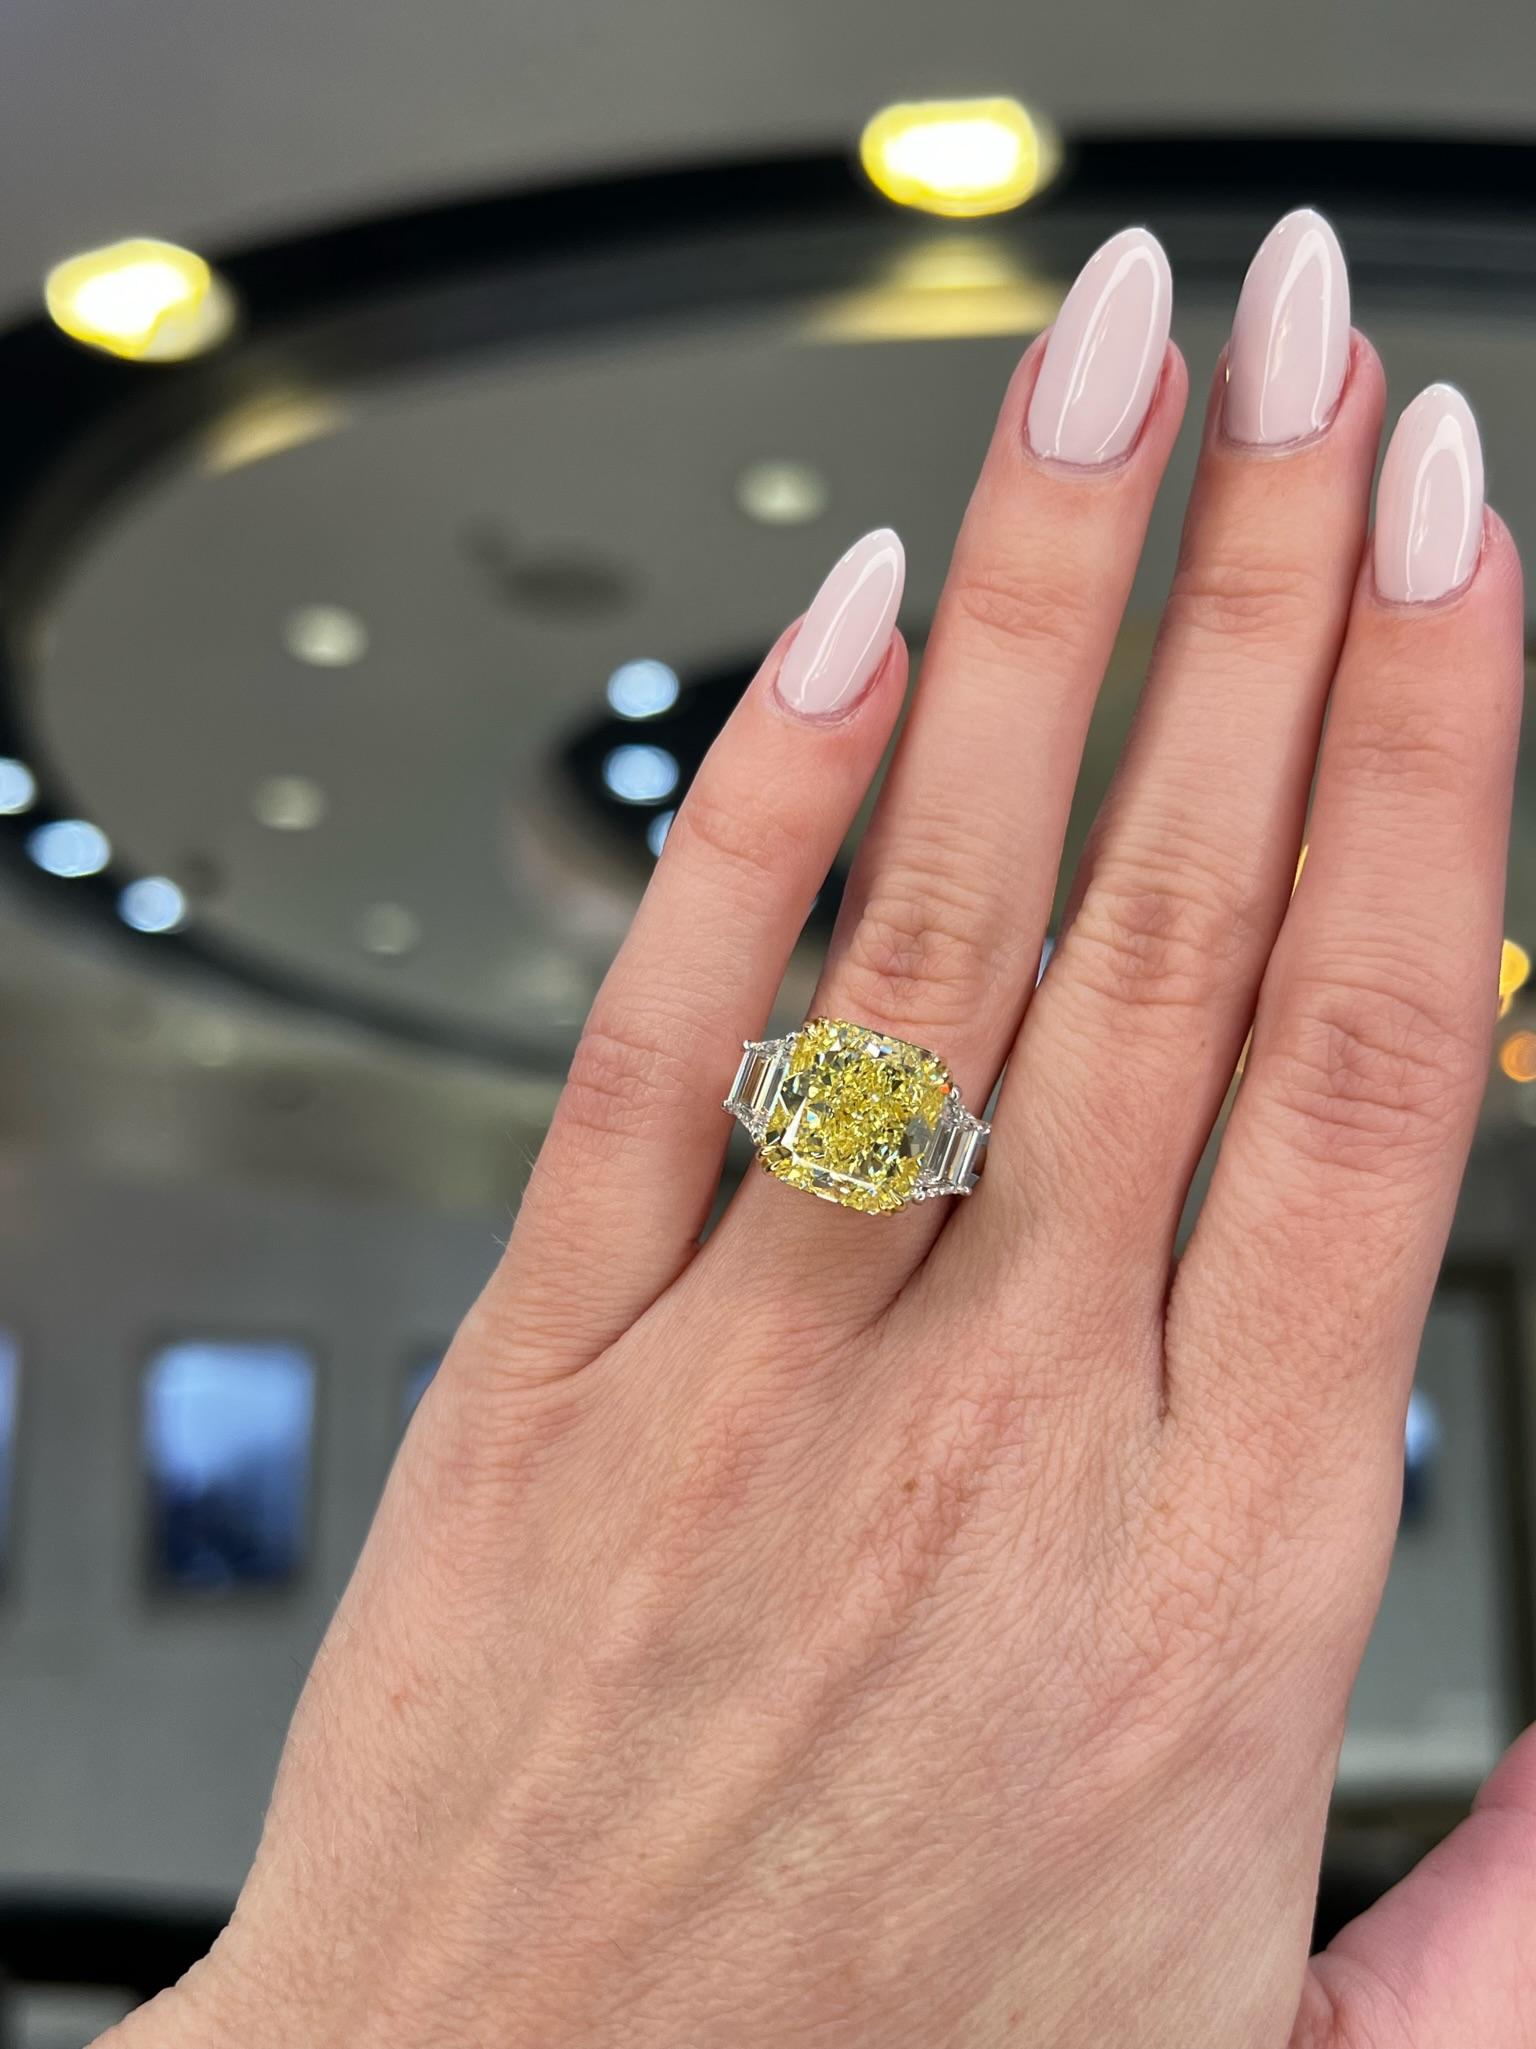 David Rosenberg 7.81 Carat Radiant Fancy Yellow VS1 GIA Diamond Engagement Ring For Sale 10